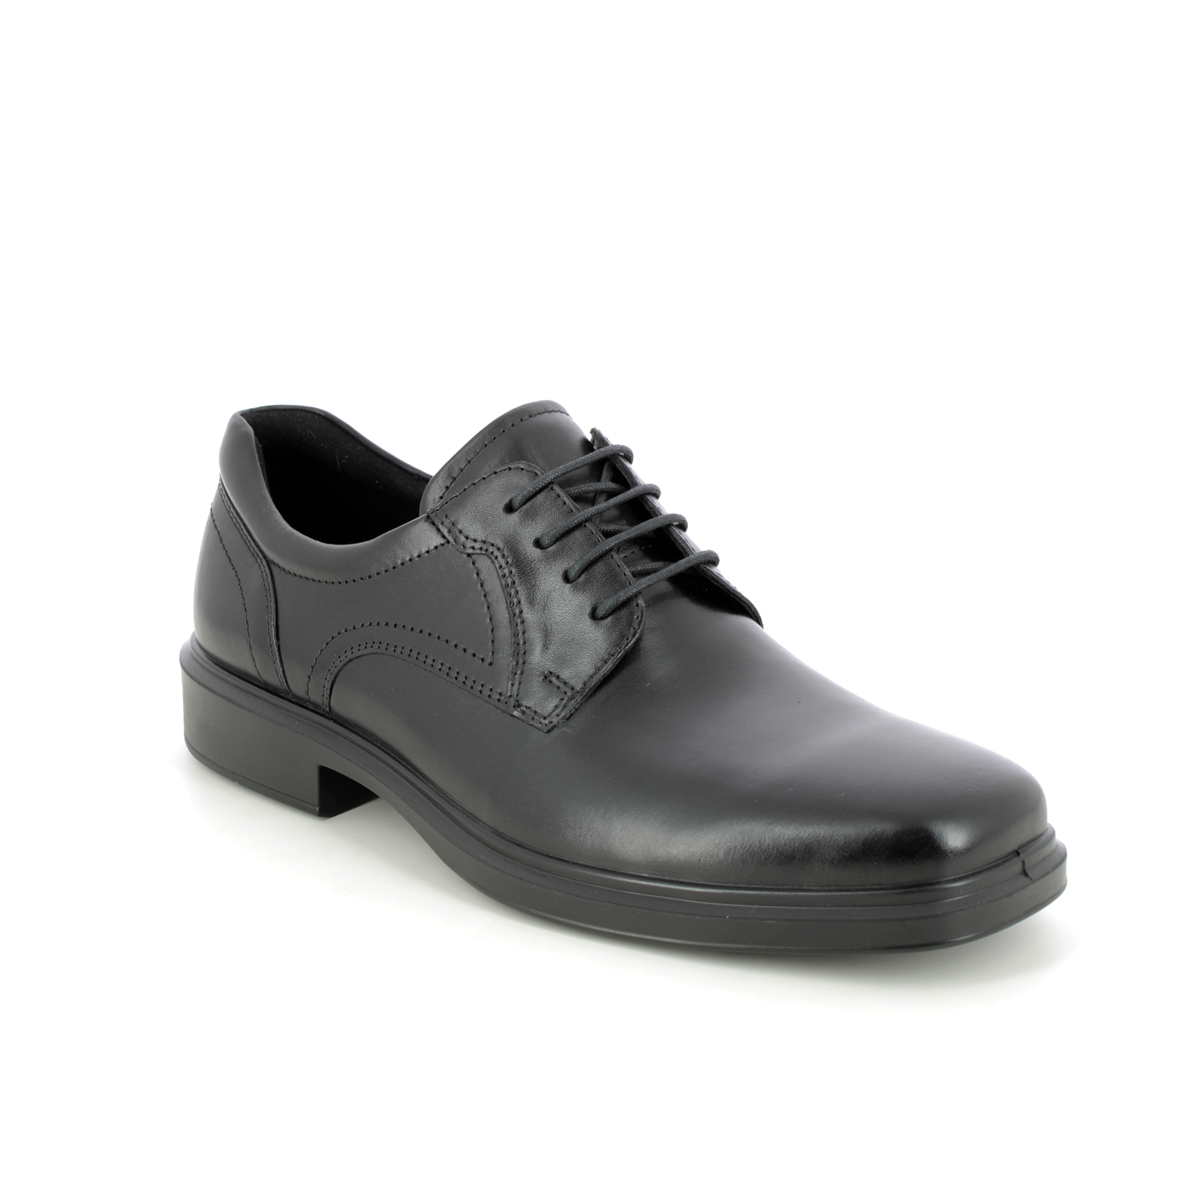 Ecco Helsinki 2 Plain Black Leather Mens Formal Shoes 500164-01001 In Size 41 In Plain Black Leather